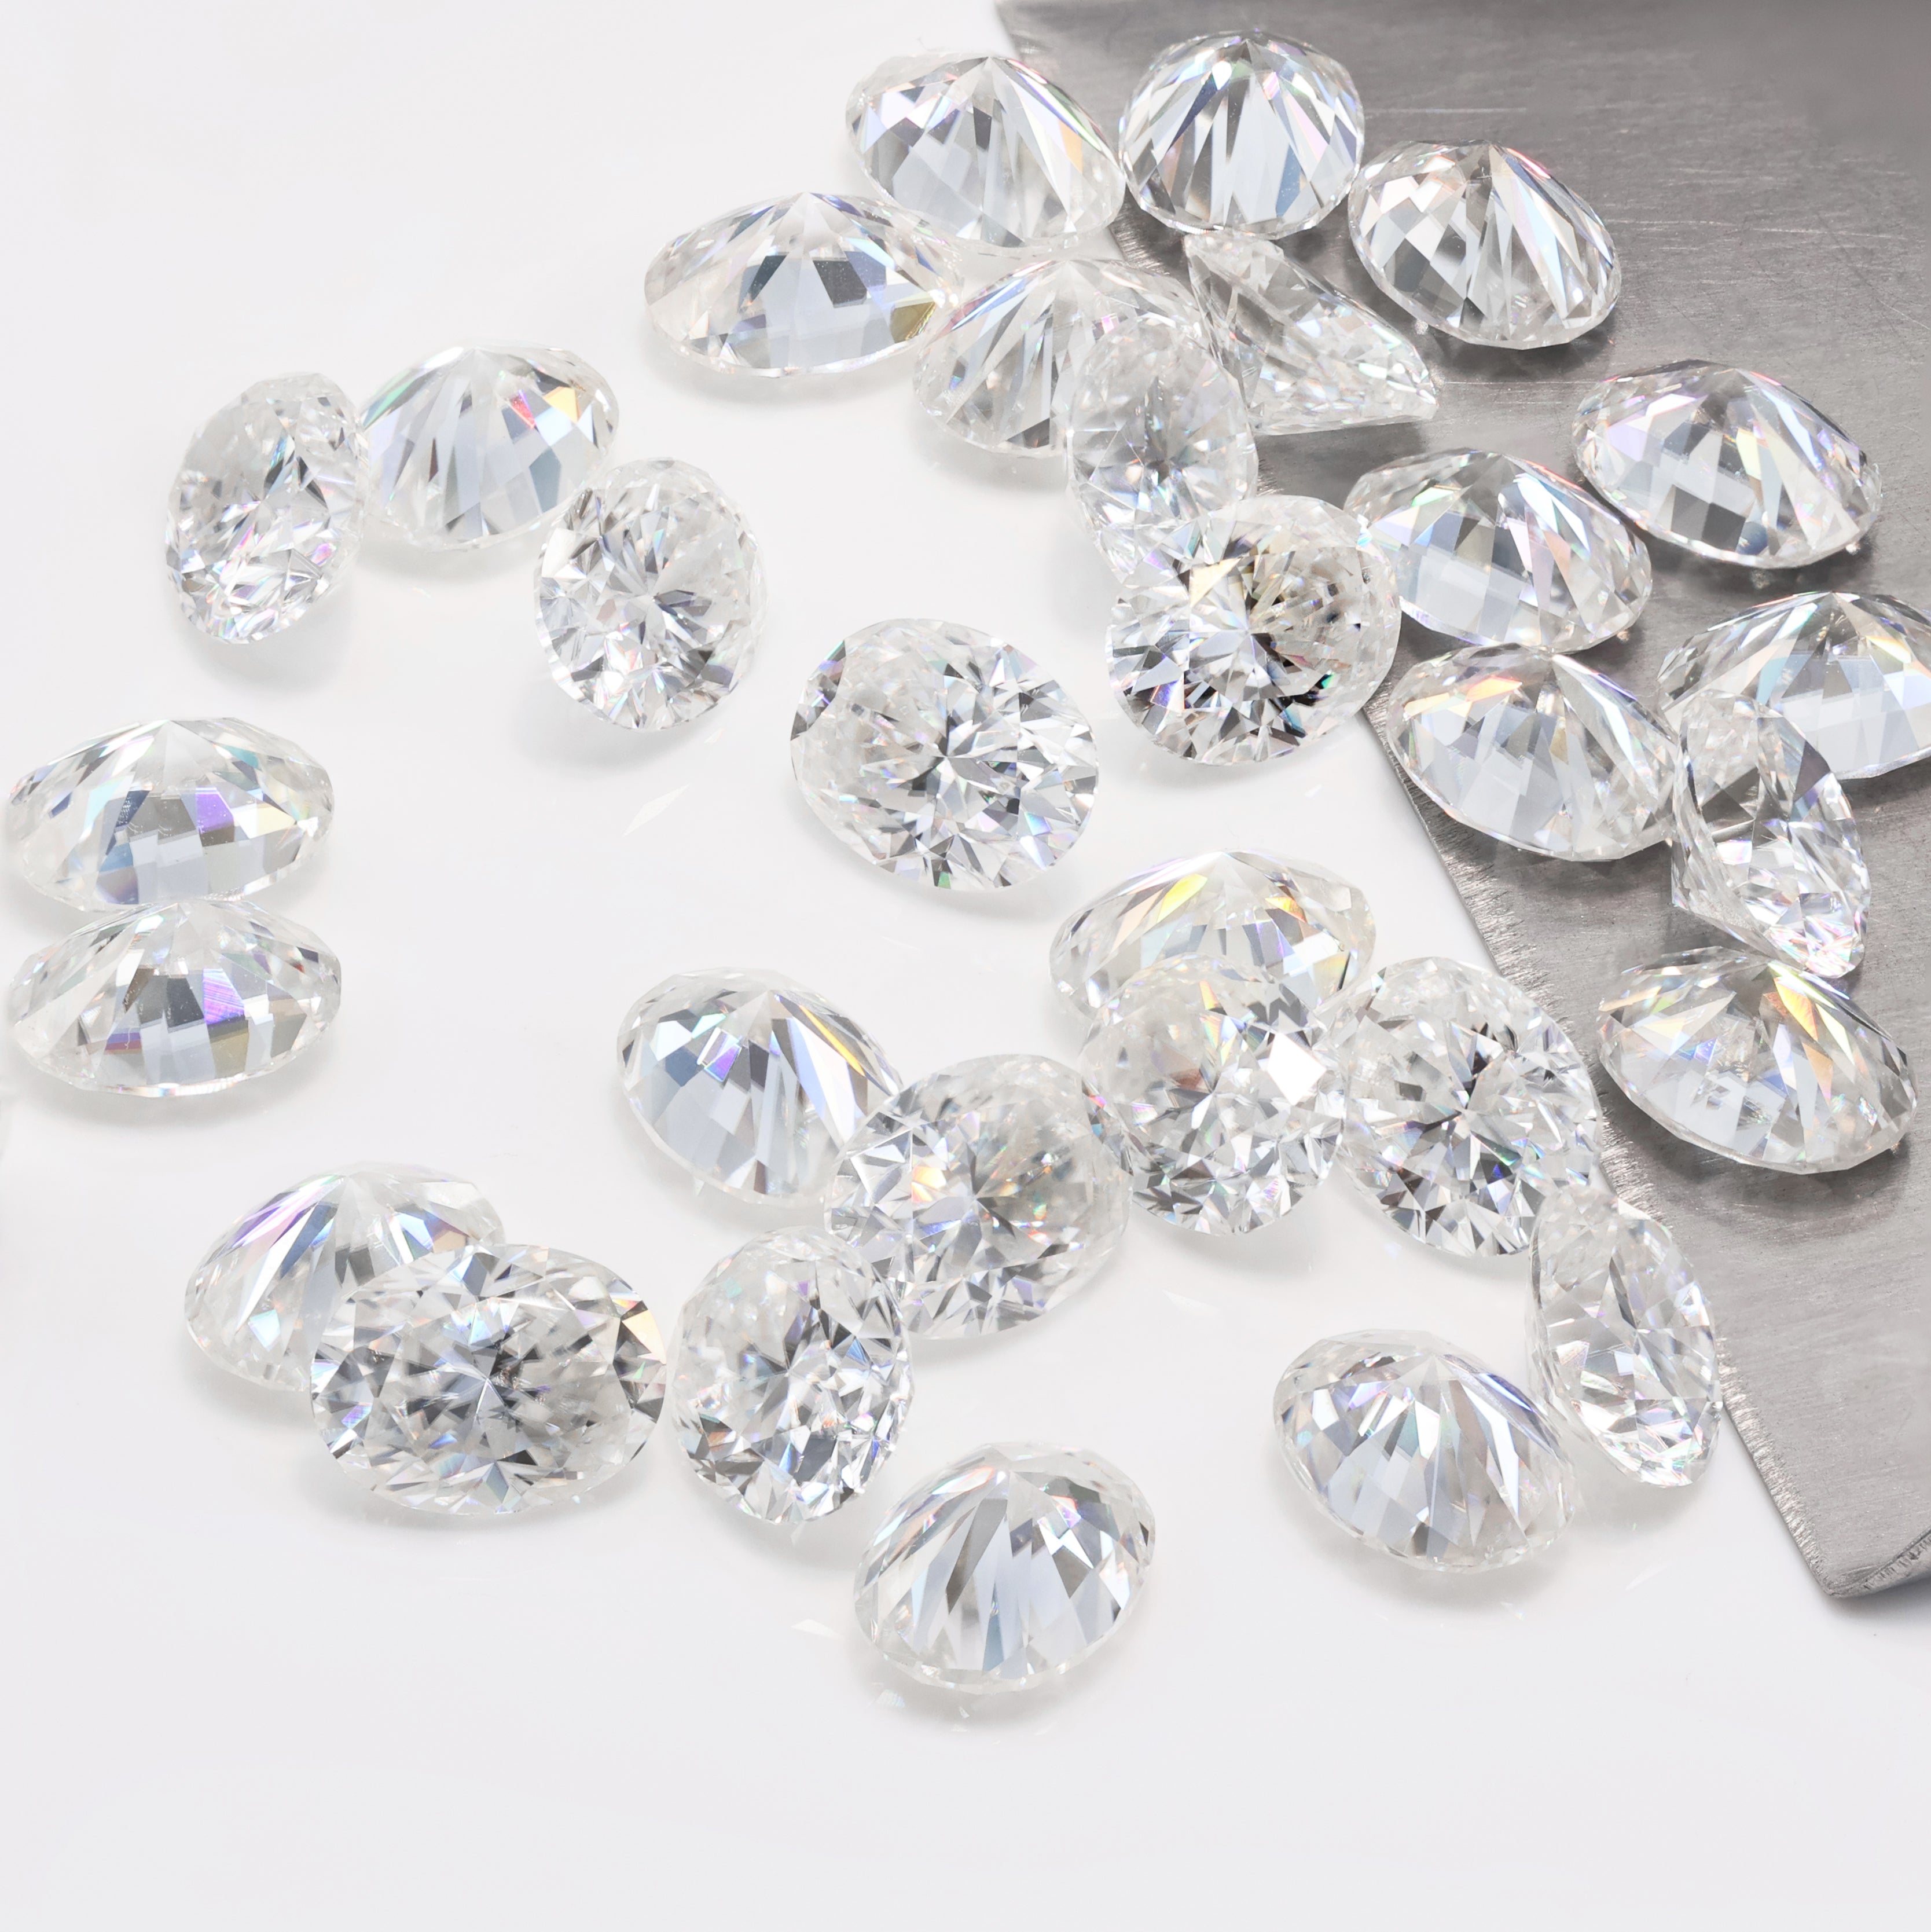 Oval Perfect Polished Oval Cut Moissanite Diamond